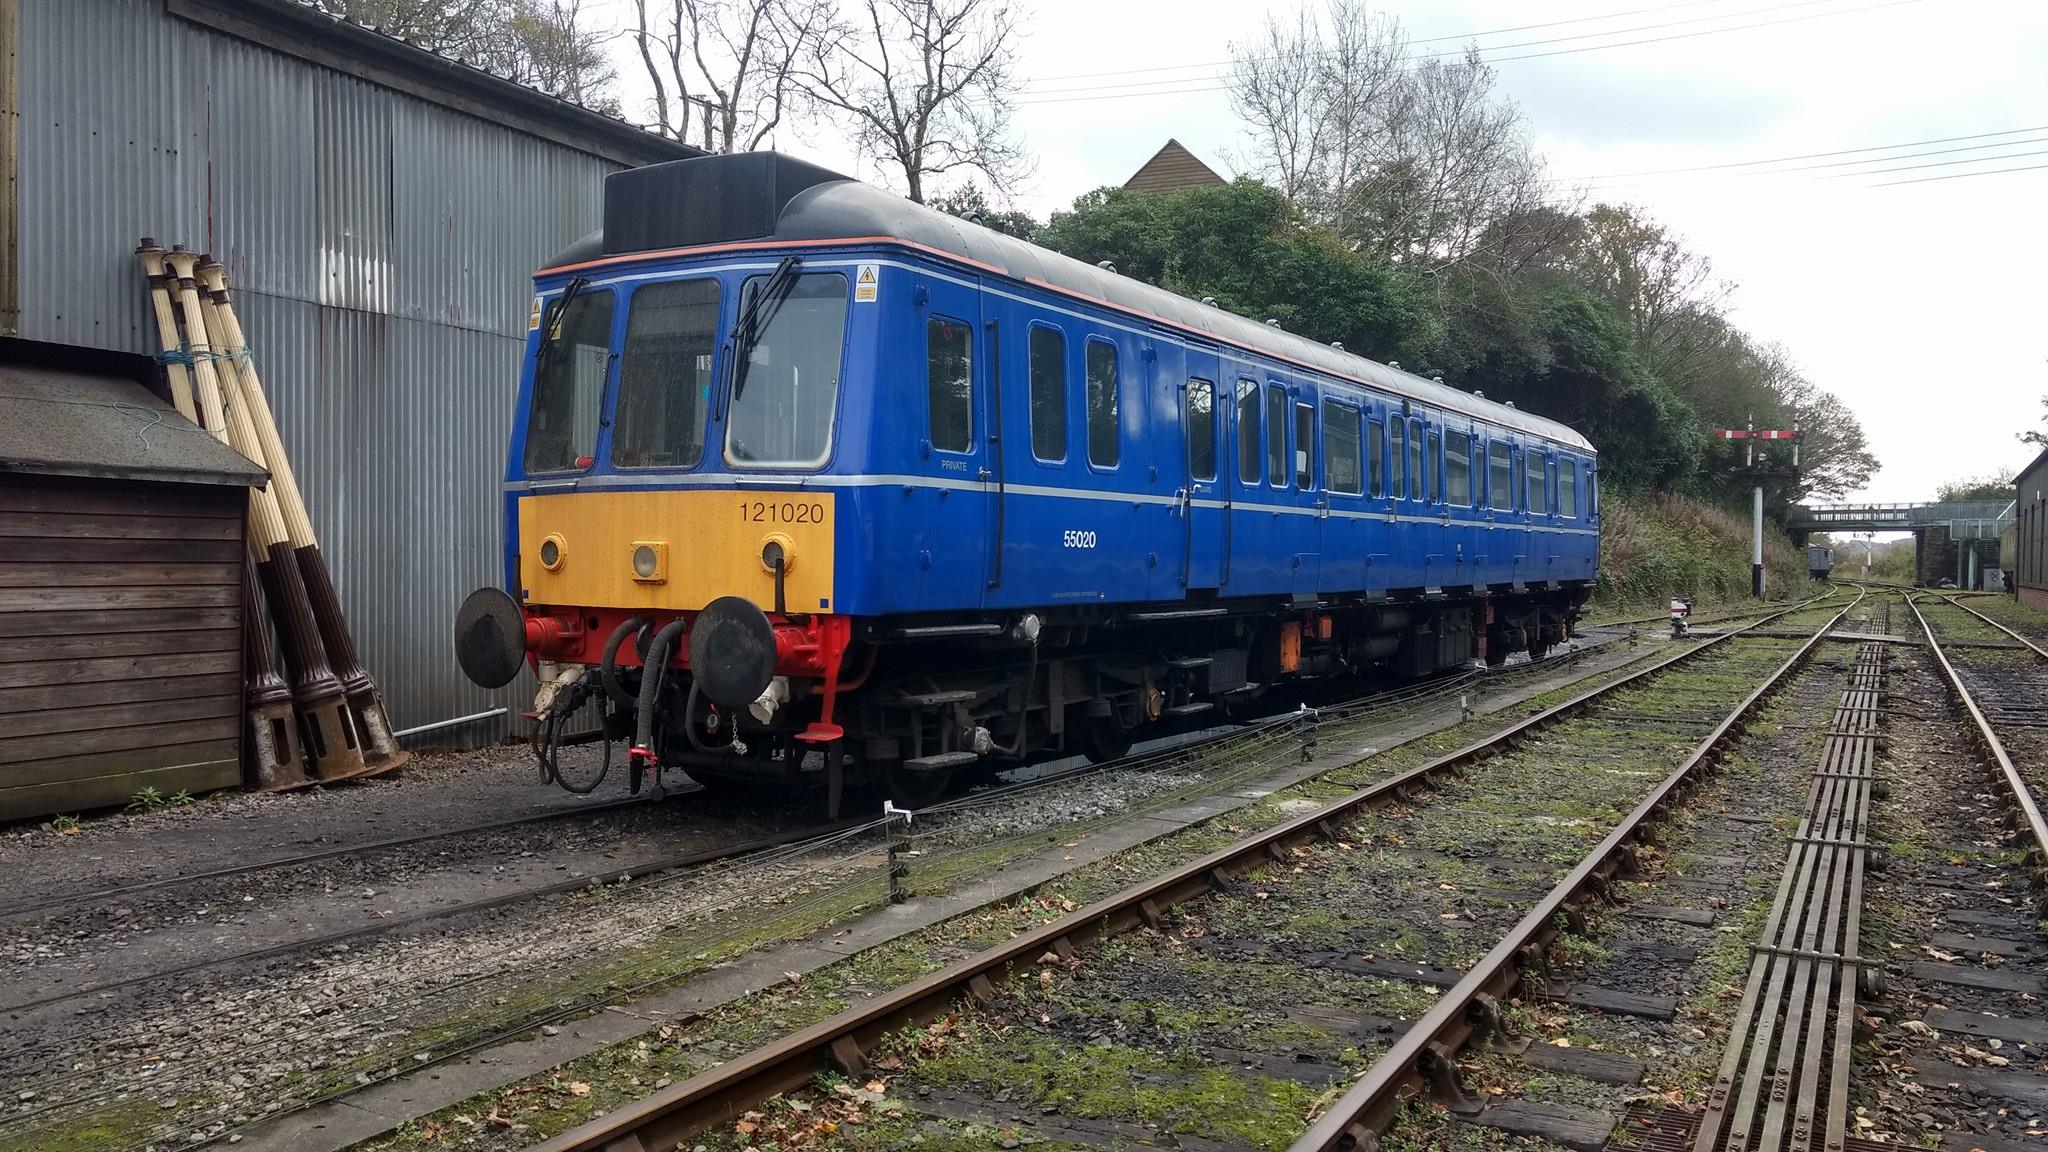 121020 // Credit: Bodmin & Wenford Railway